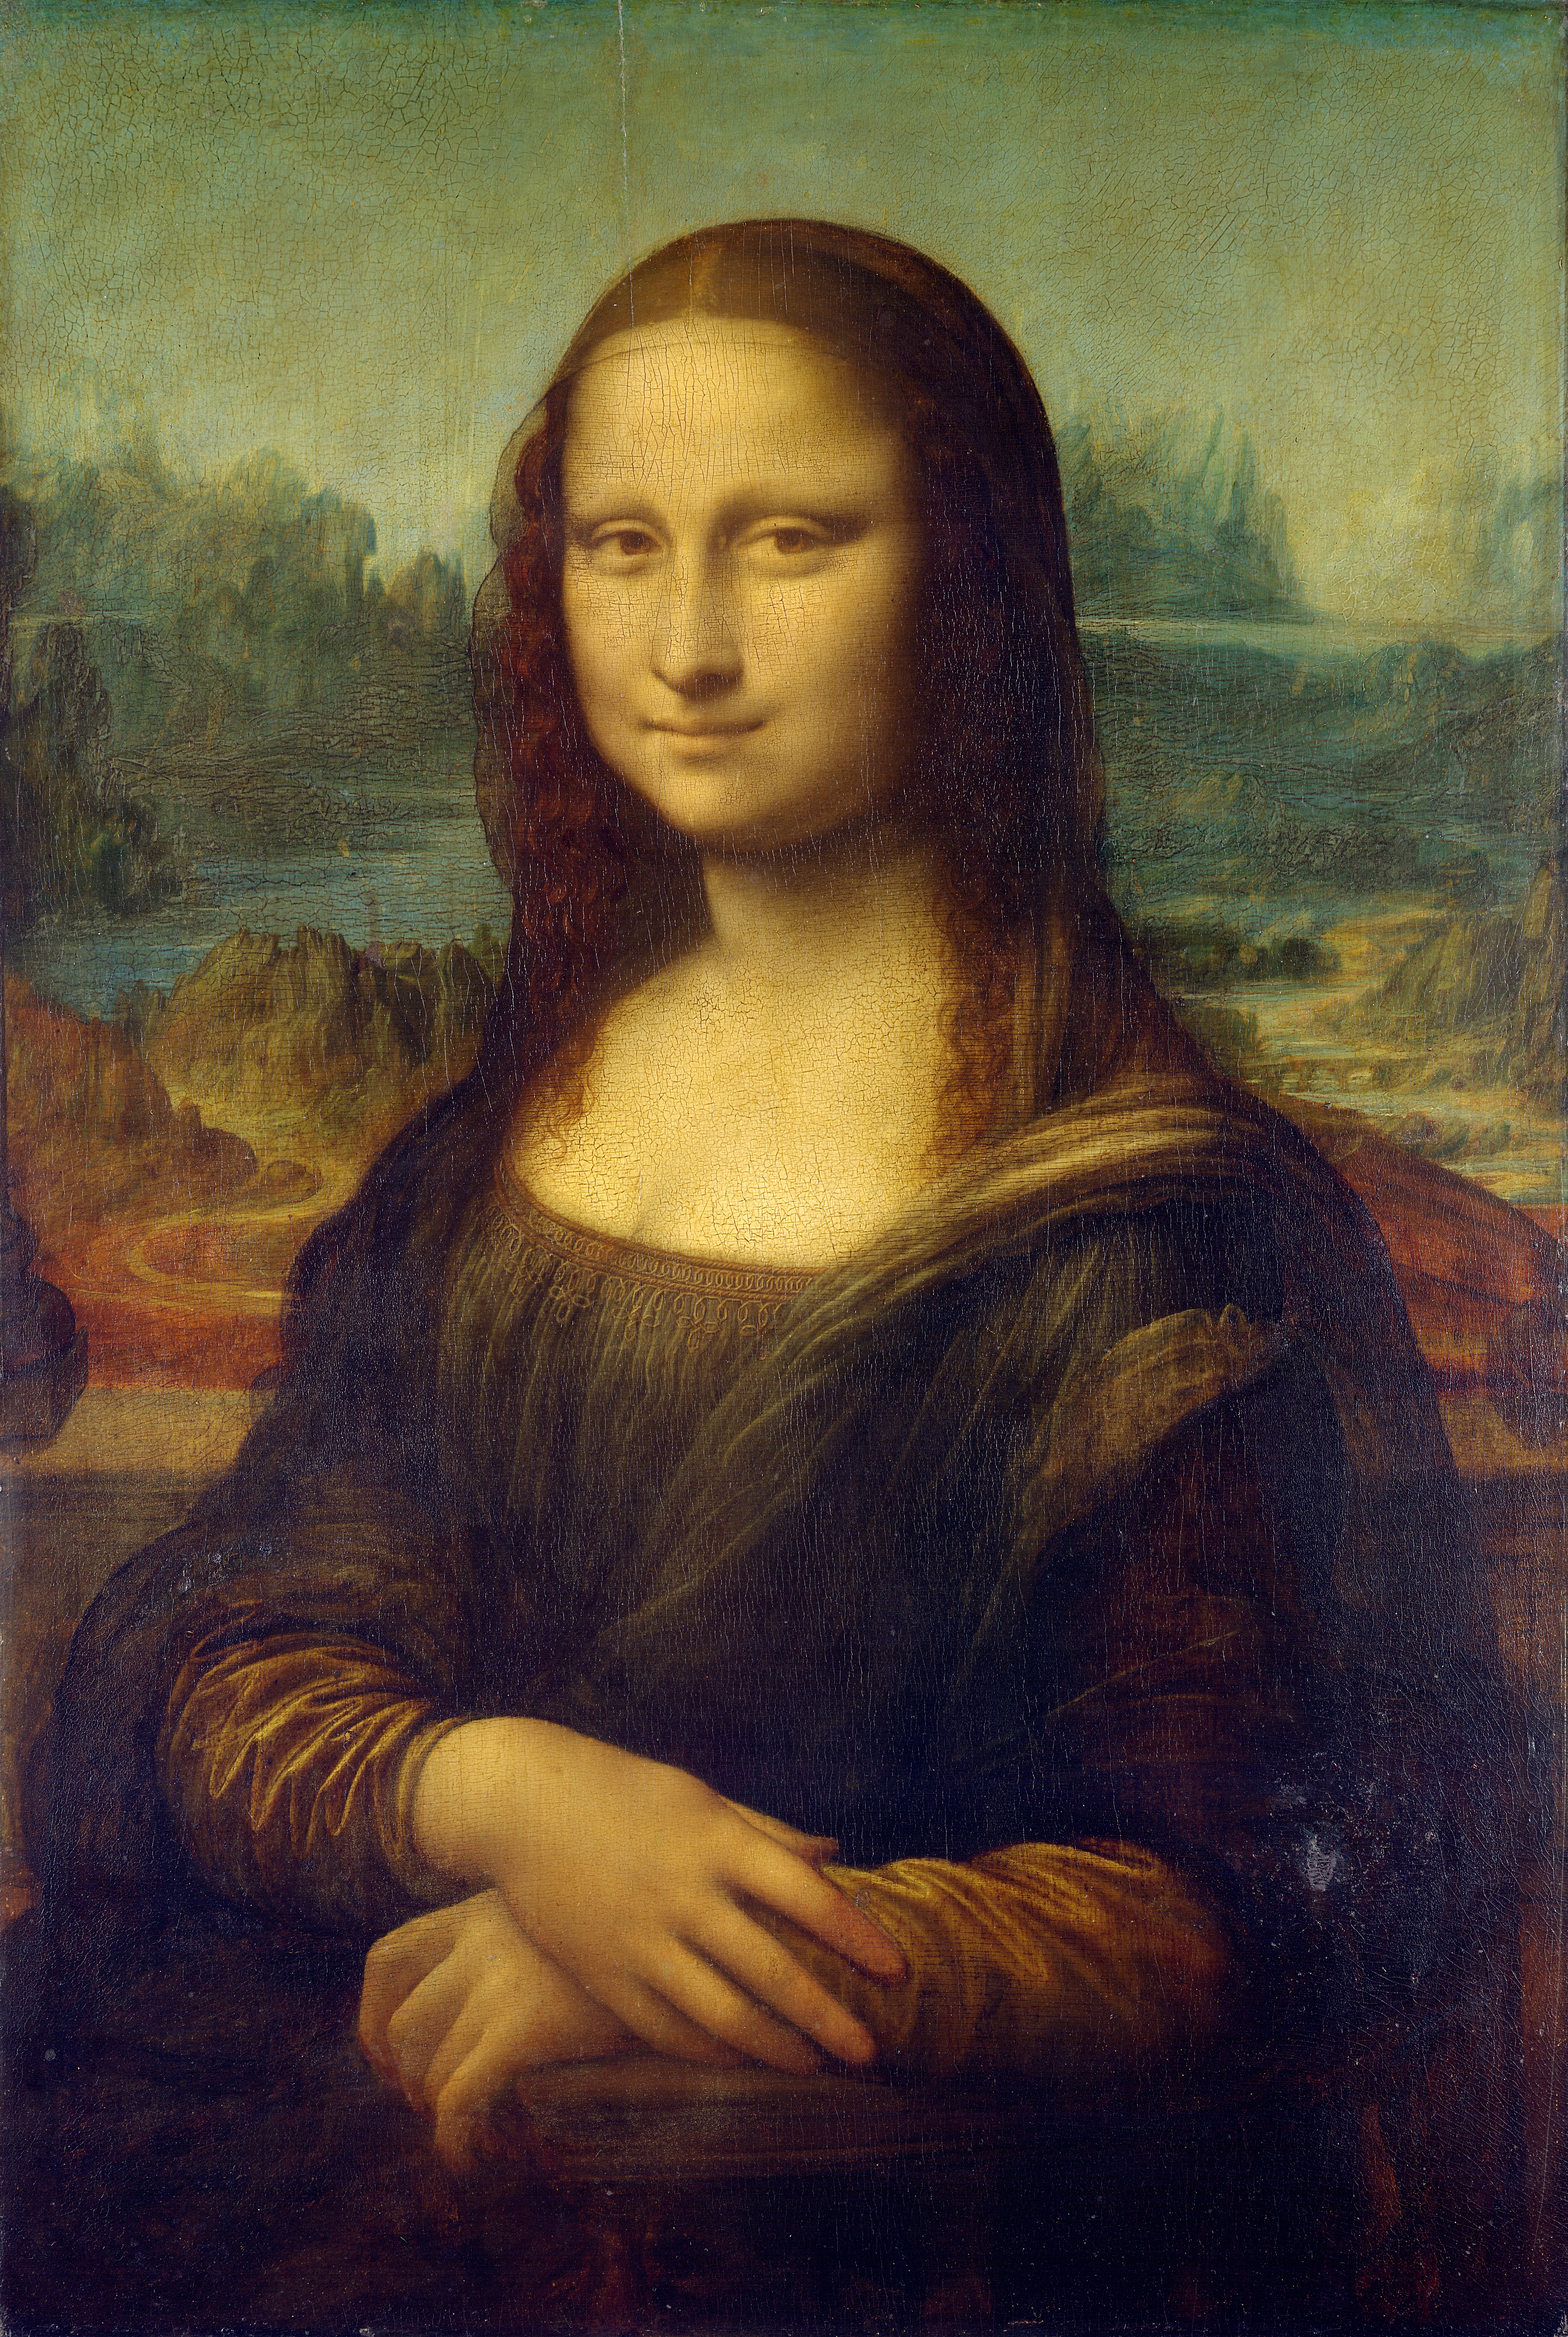 Leonardo da Vinci, Portrait of Mona Lisa del Giocondo, 1503-1506, Louvre, Paris, France.